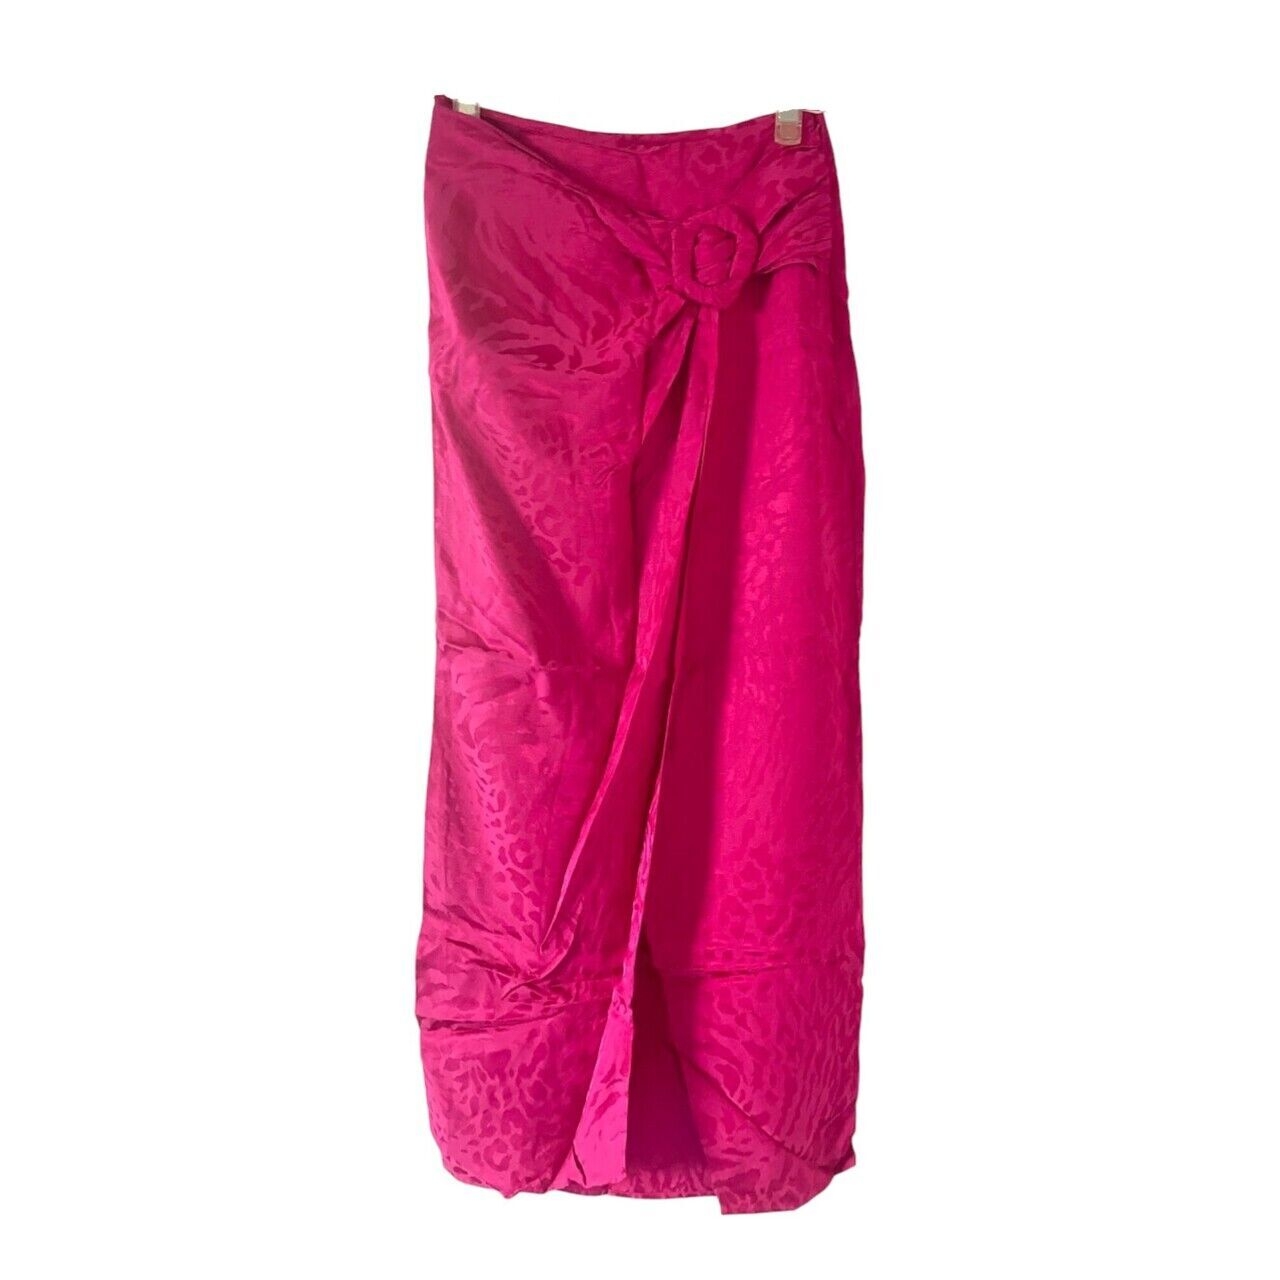 Zara Fuchsia Midi Skirt with Buckle